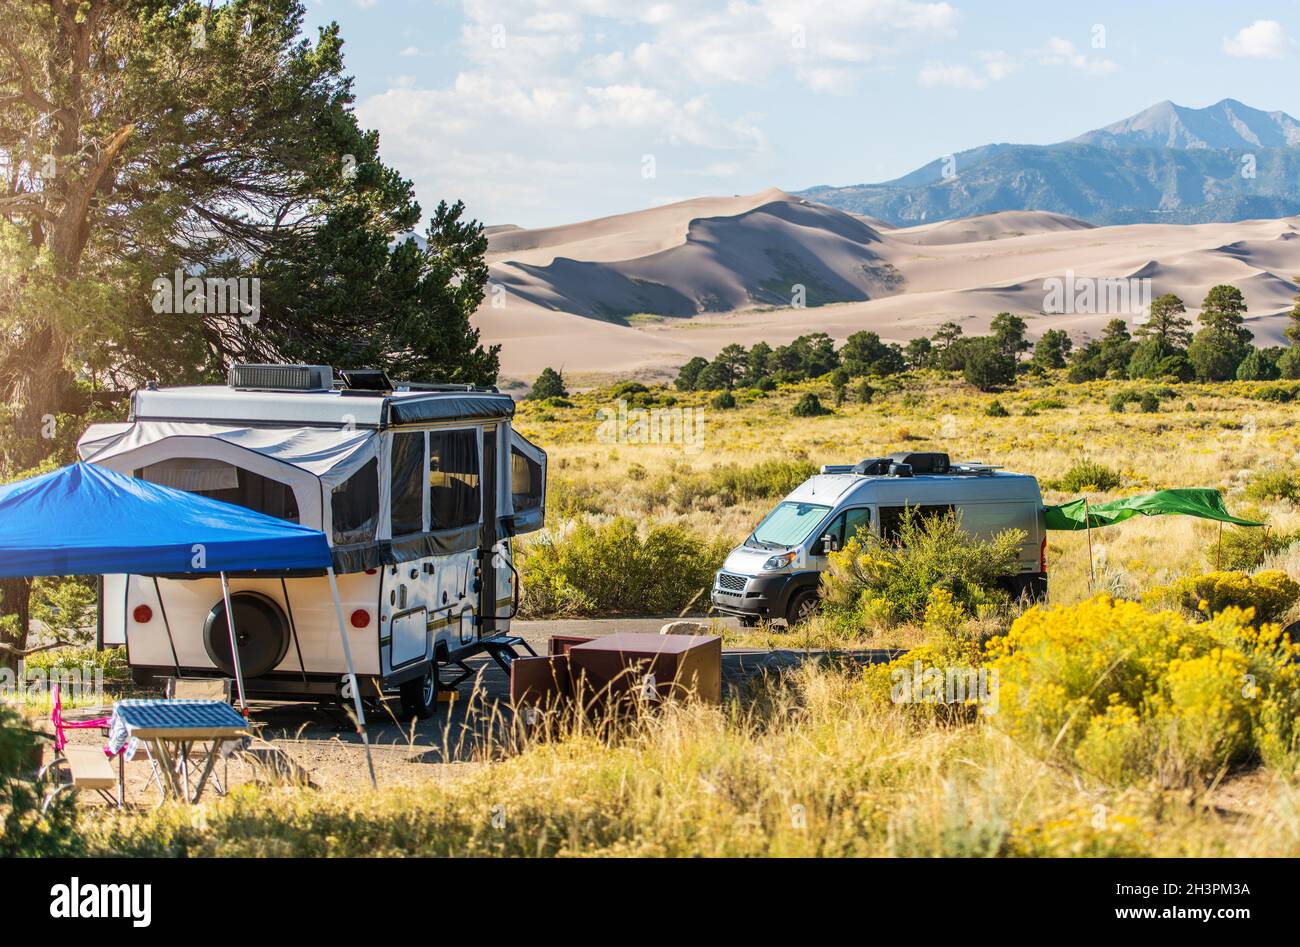 American National Parks Travel. RV Camping in Colorado Great Sand Dunes, Stati Uniti d'America. Foto Stock